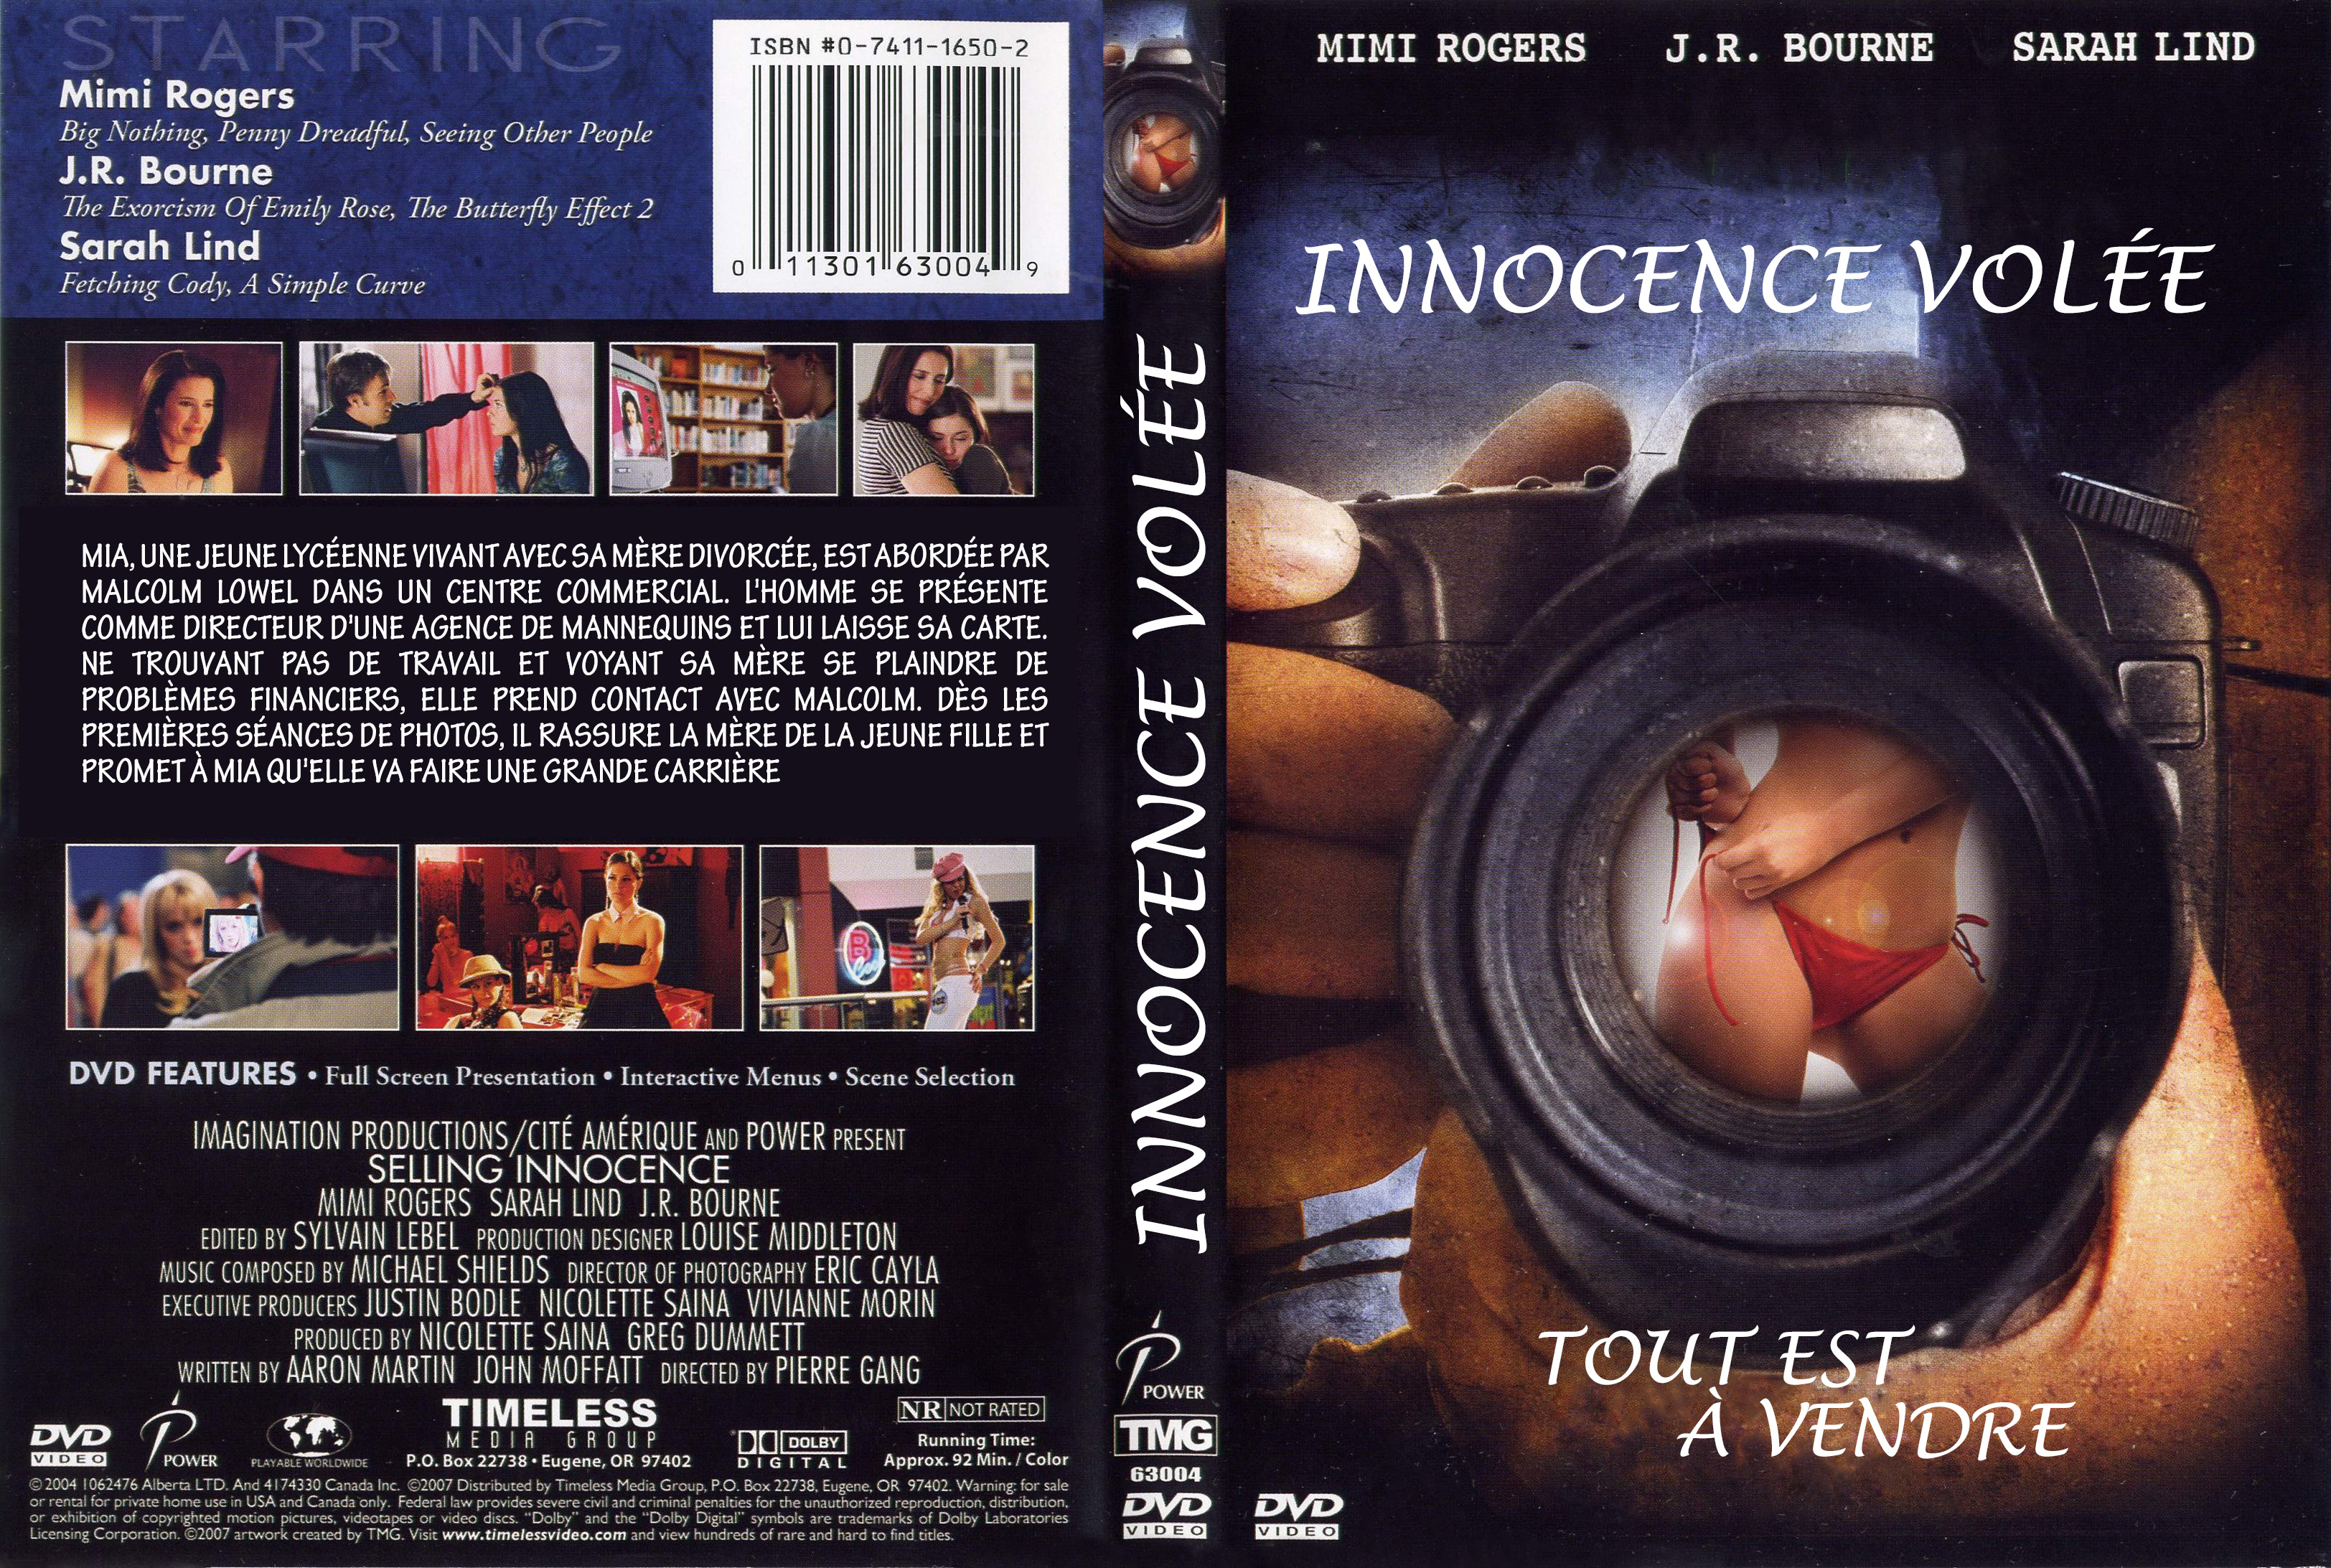 Jaquette DVD Innocence vole